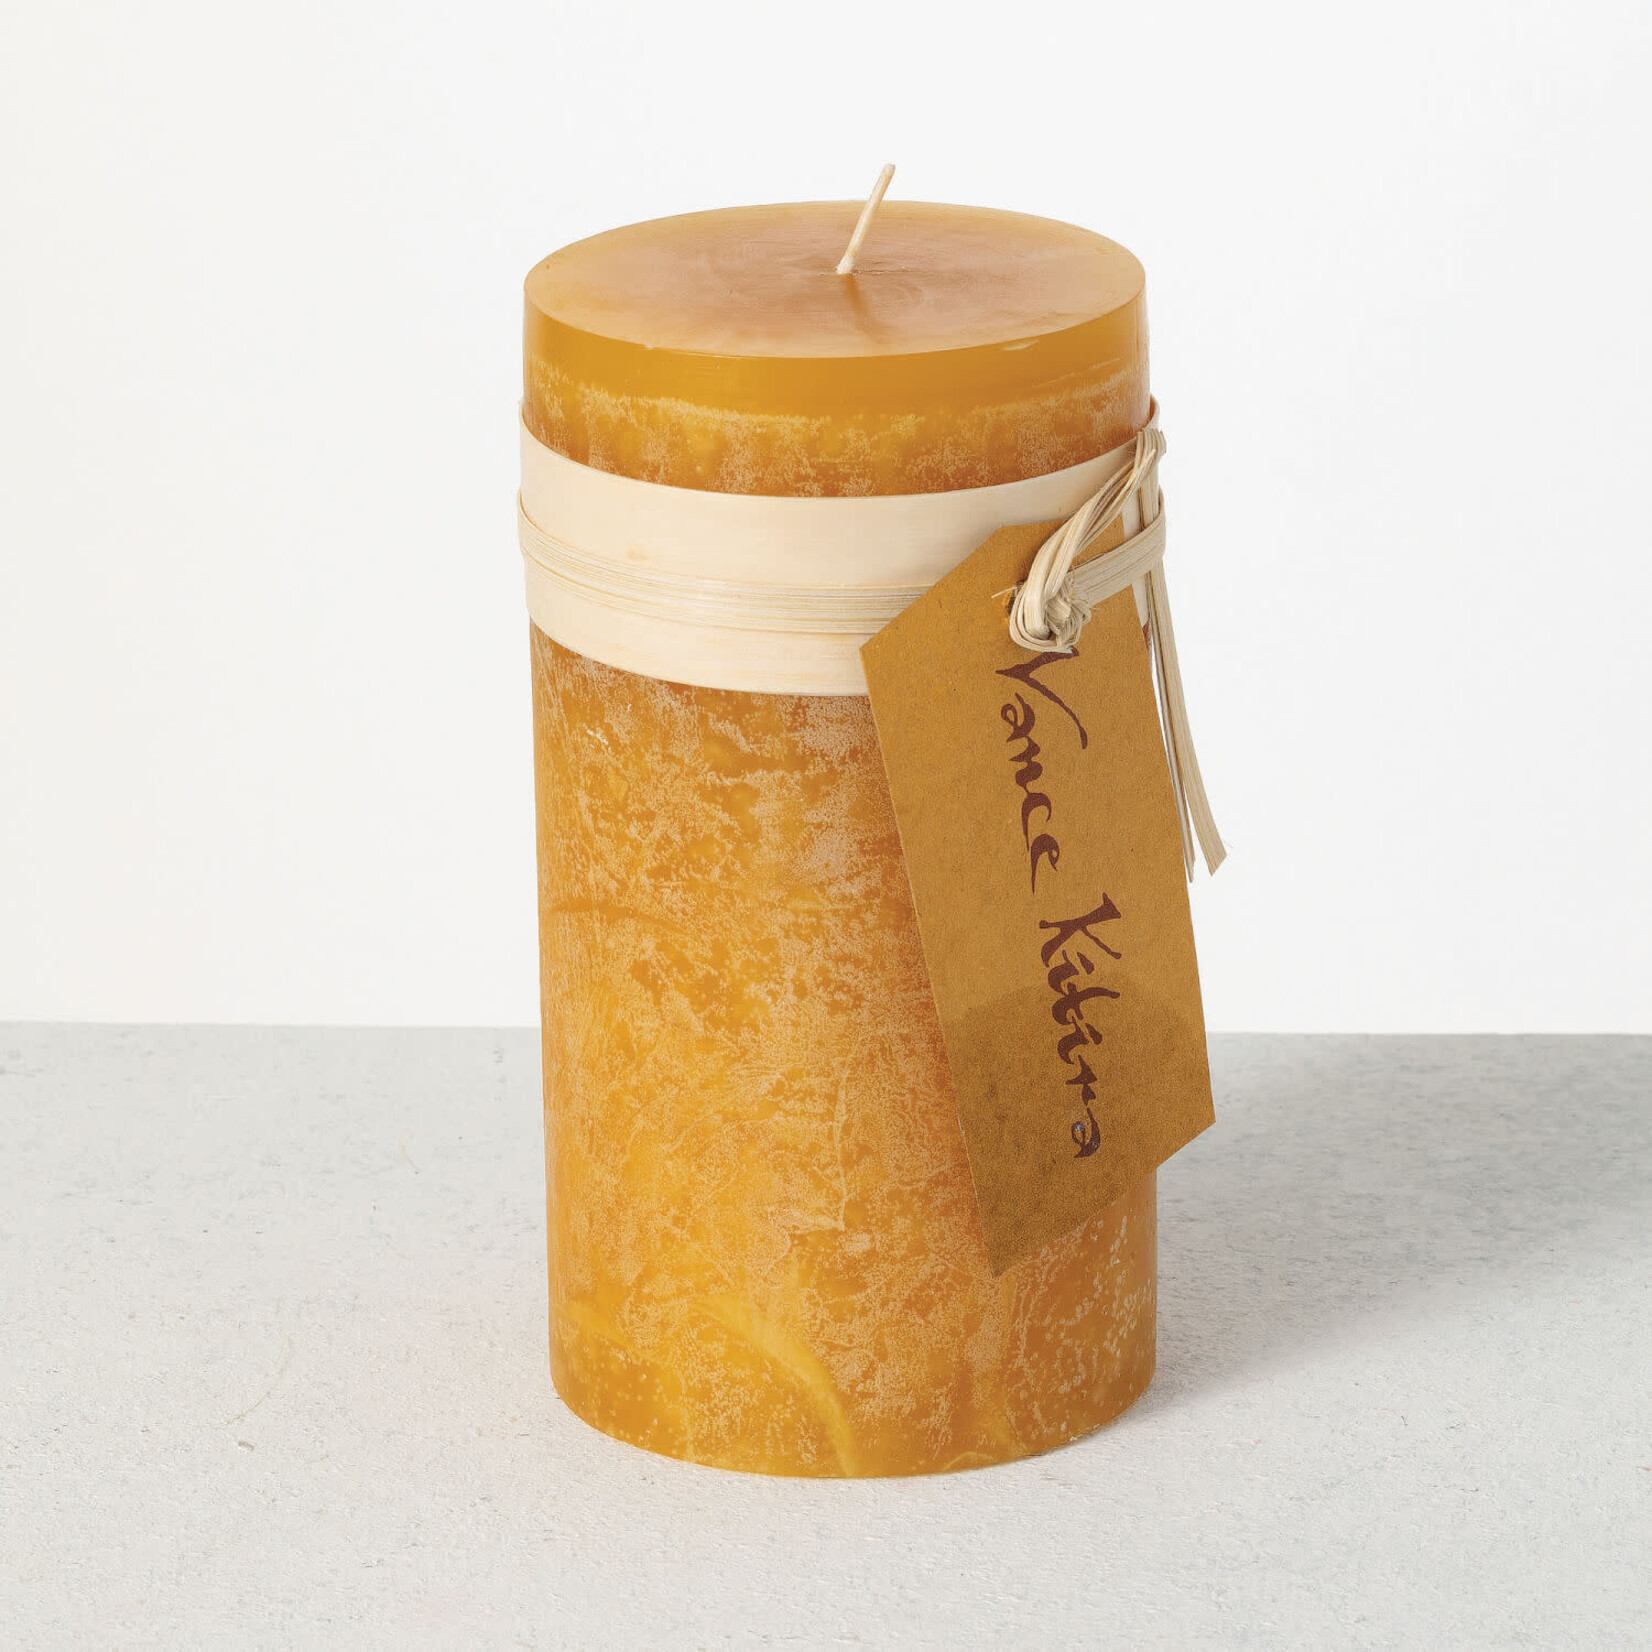 Sullivans Timber Pillar Candle, Brown Sugar - 6”